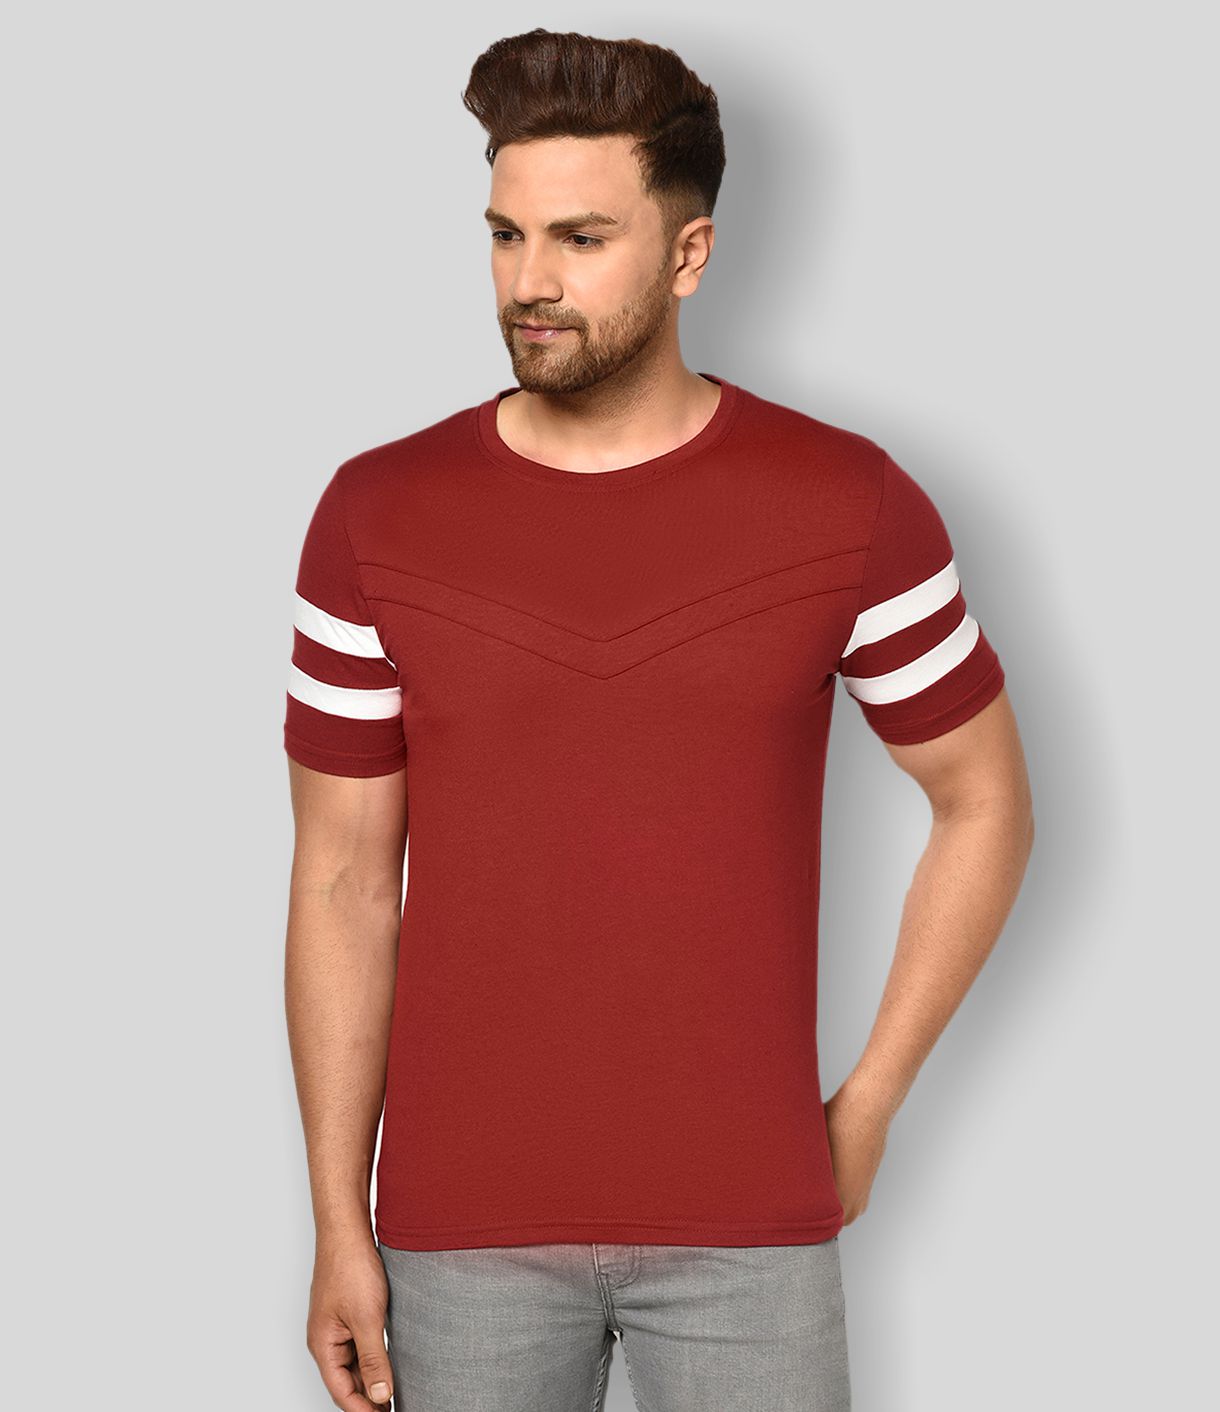     			Glito - Maroon Cotton Blend Regular Fit Men's T-Shirt ( Pack of 1 )